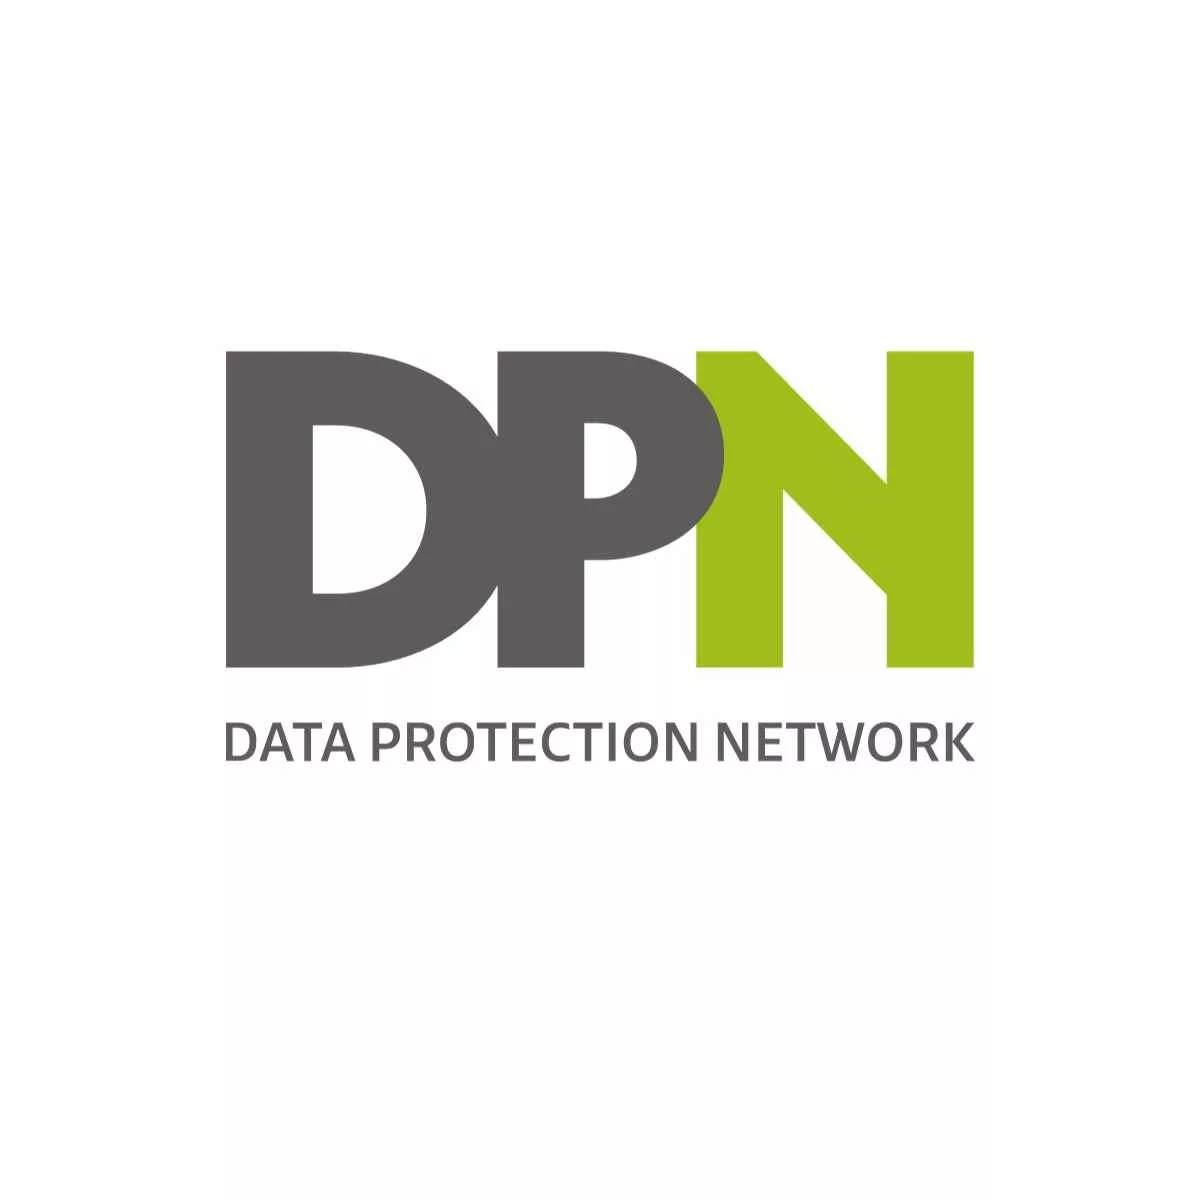 Data Protection Network logo on white background